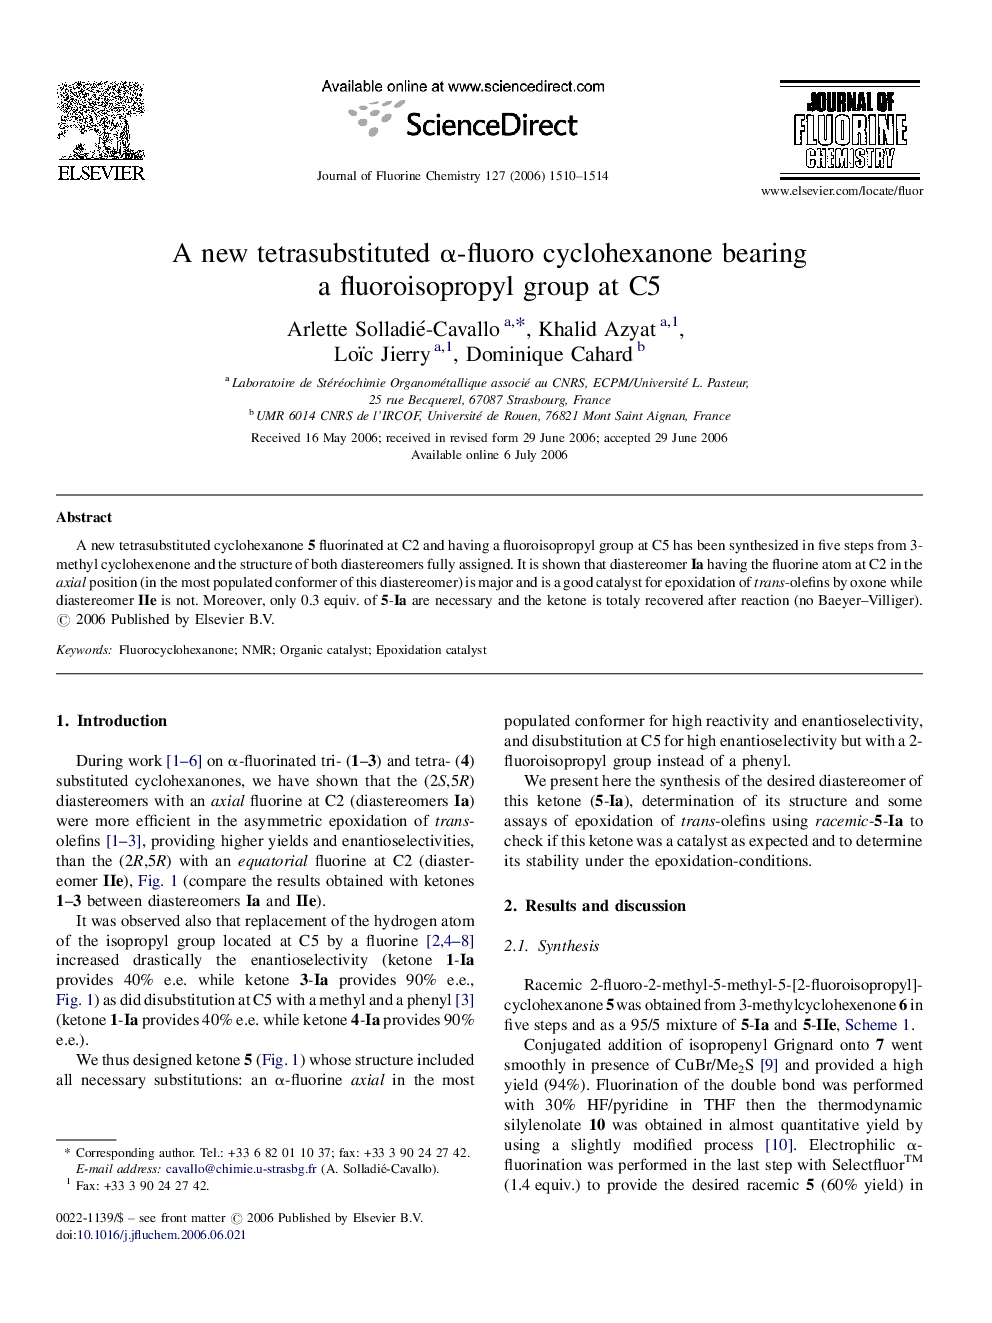 A new tetrasubstituted α-fluoro cyclohexanone bearing a fluoroisopropyl group at C5